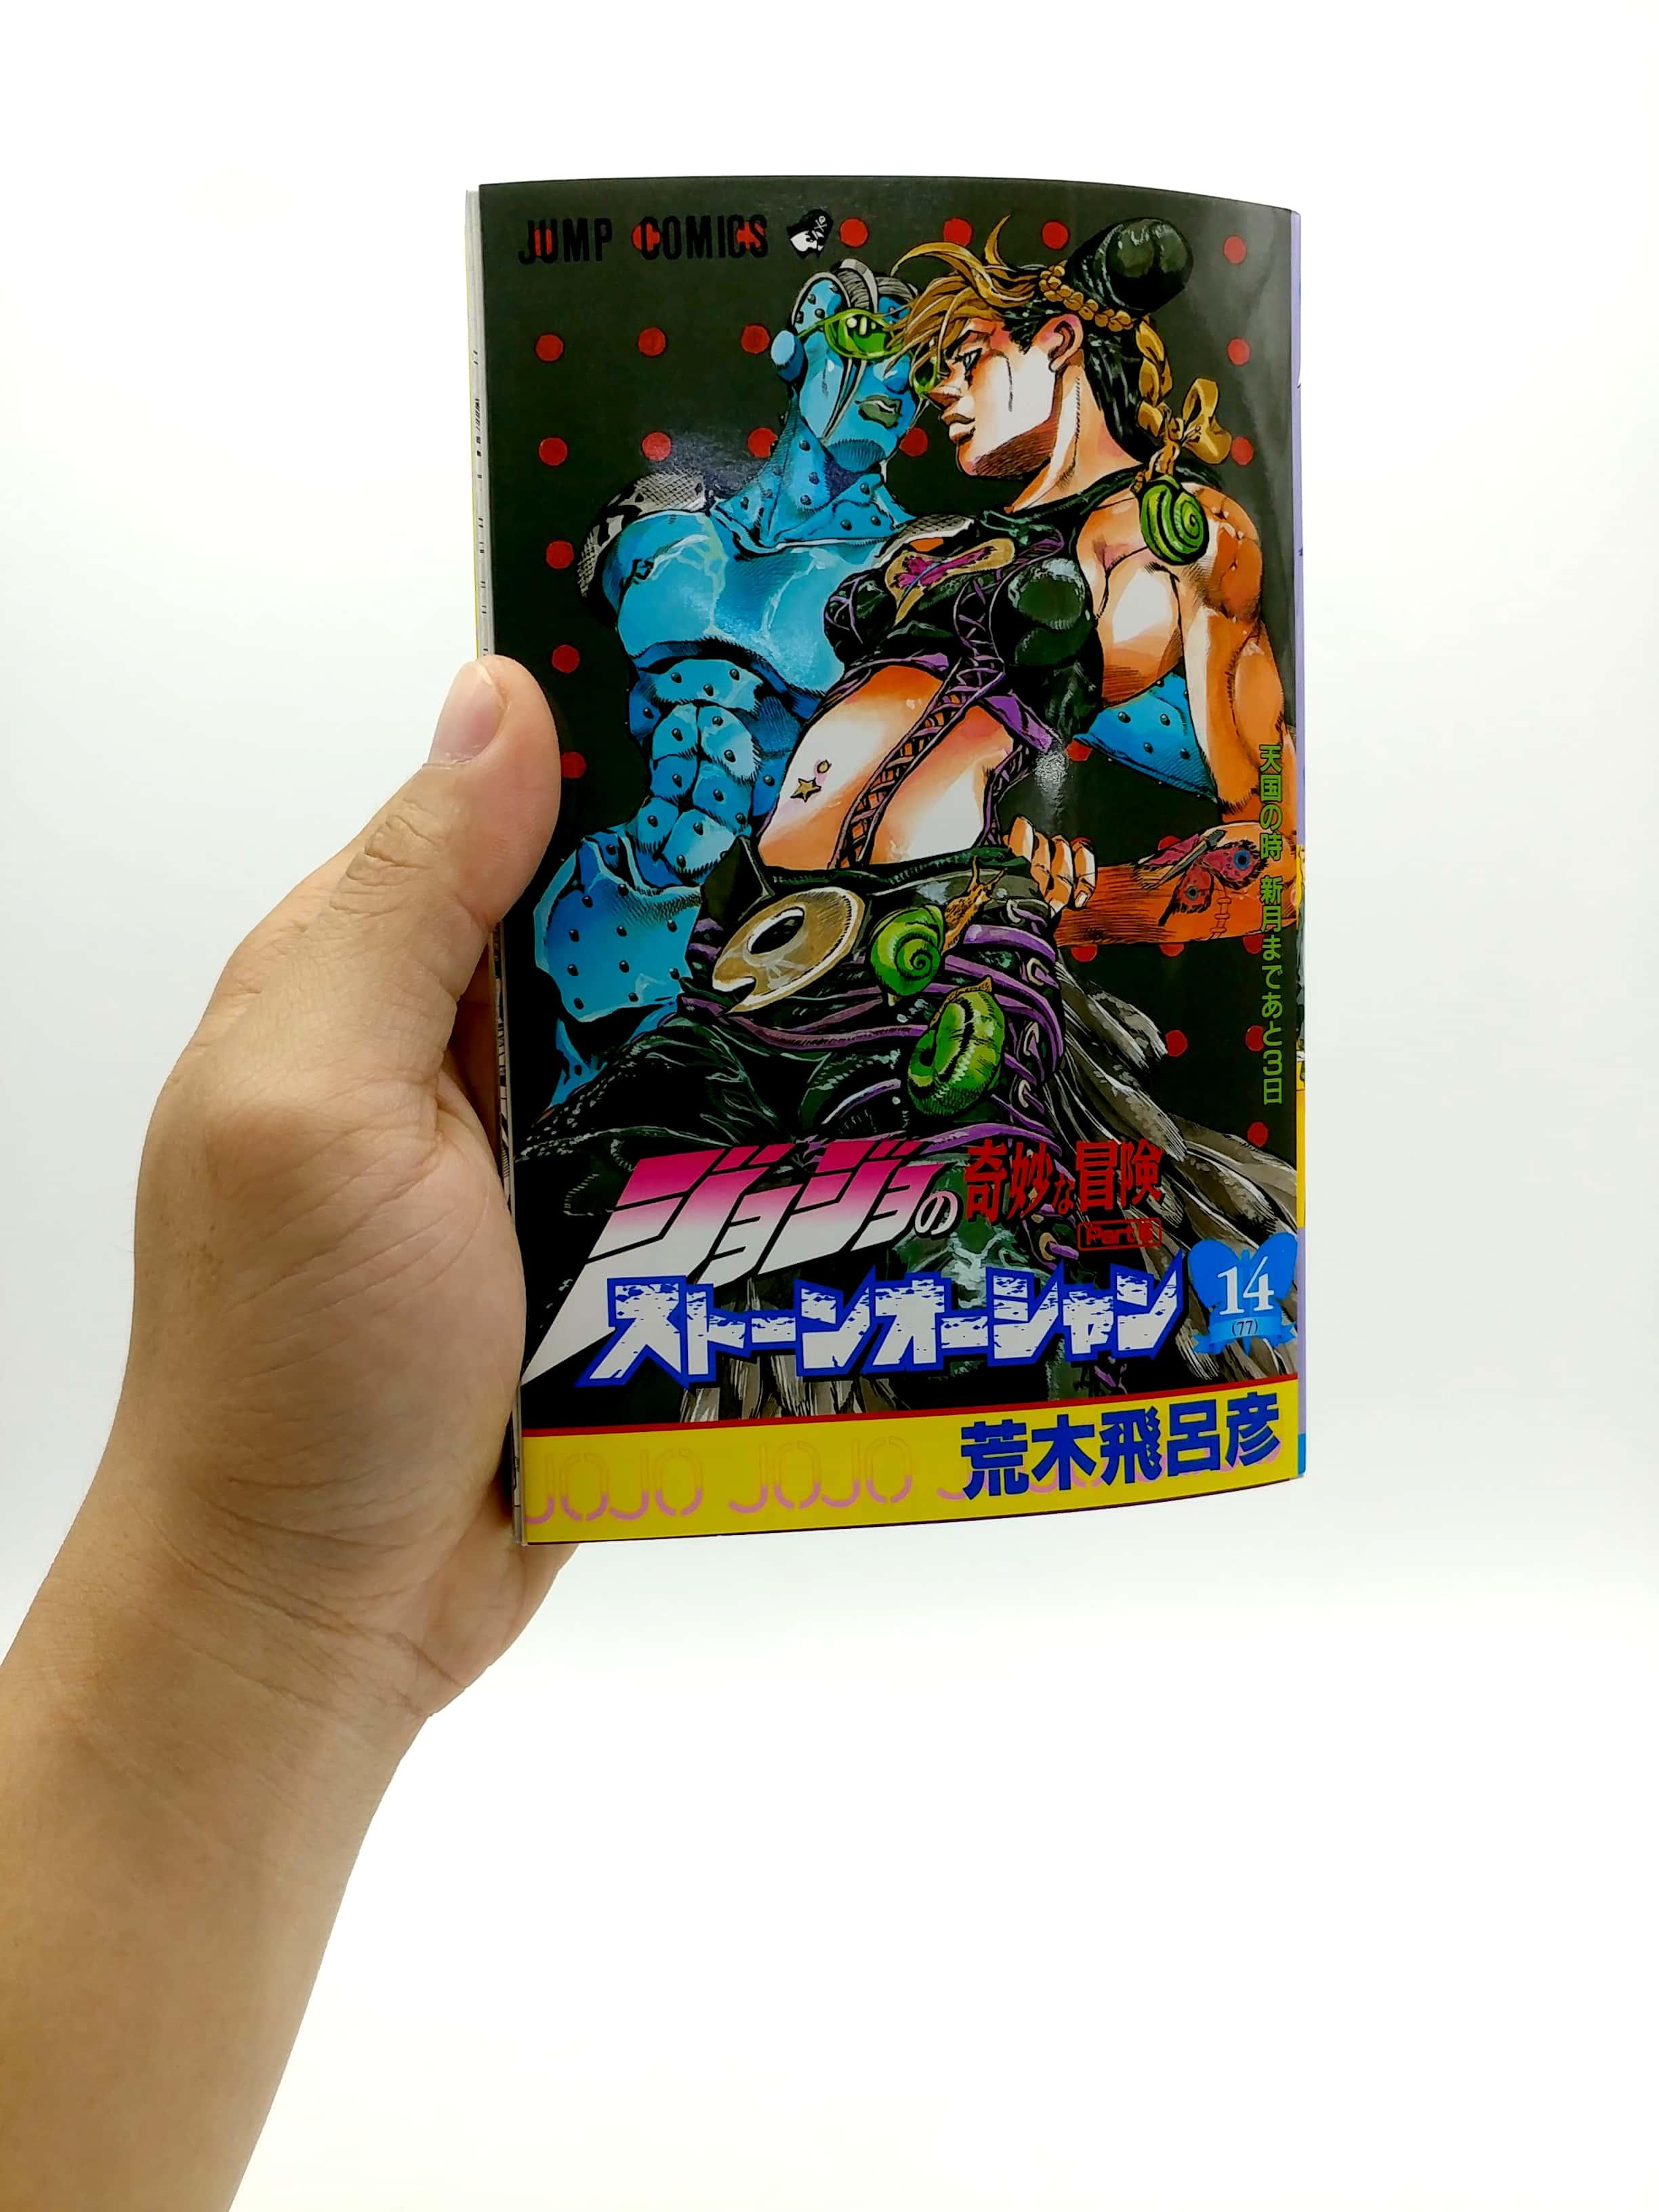 JoJo's Bizarre Adventure Part 6 Stone Ocean 14 (Japanese Edition)